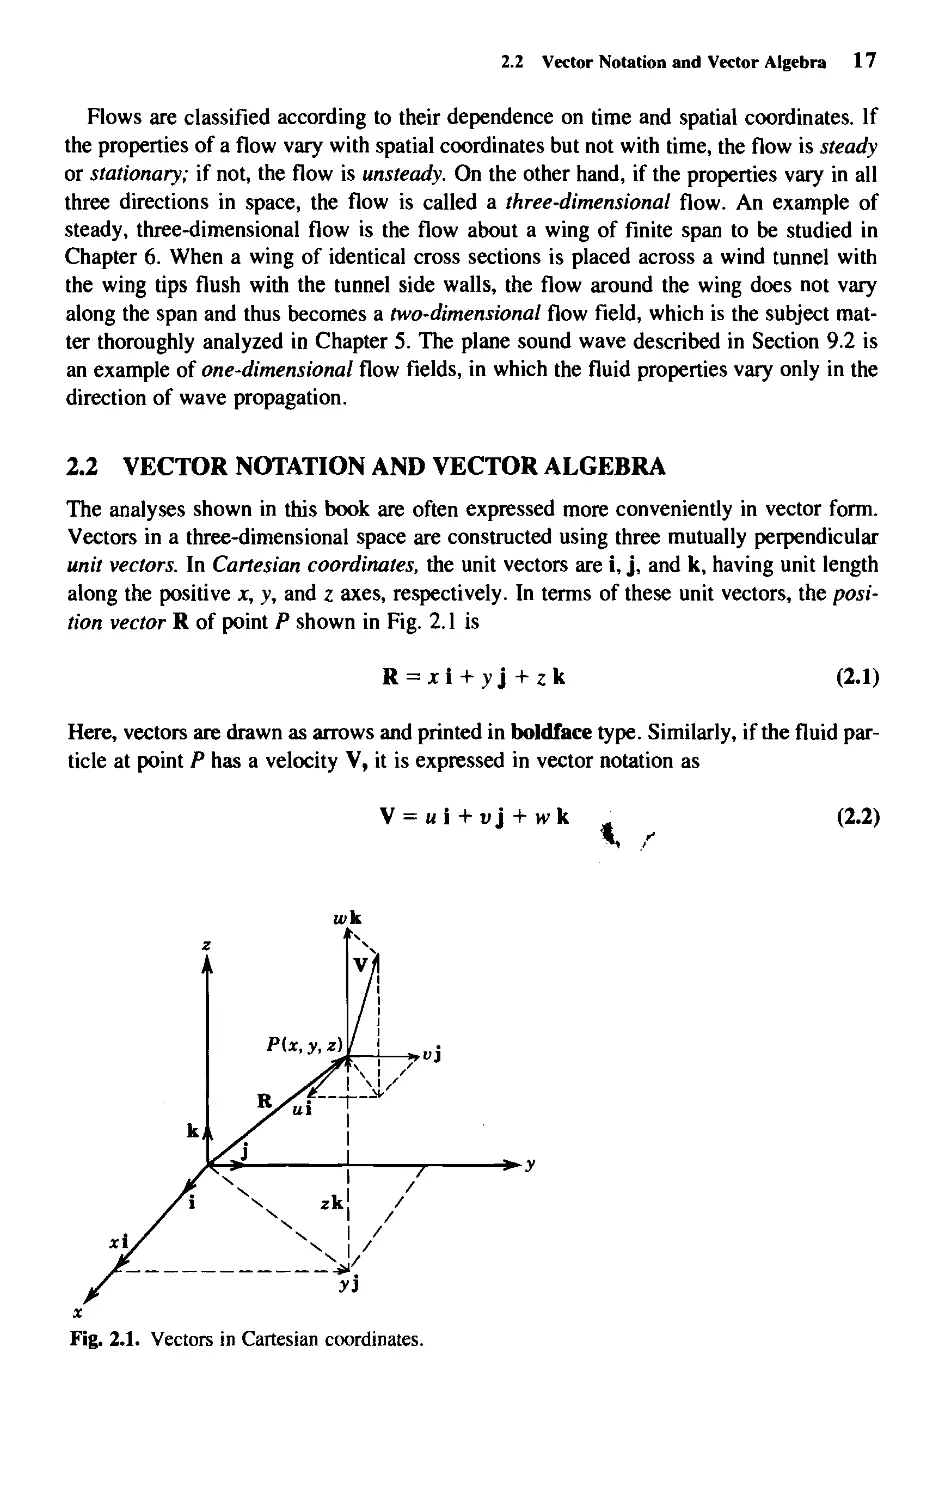 2.2 - Vector Notation and Vector Algebra